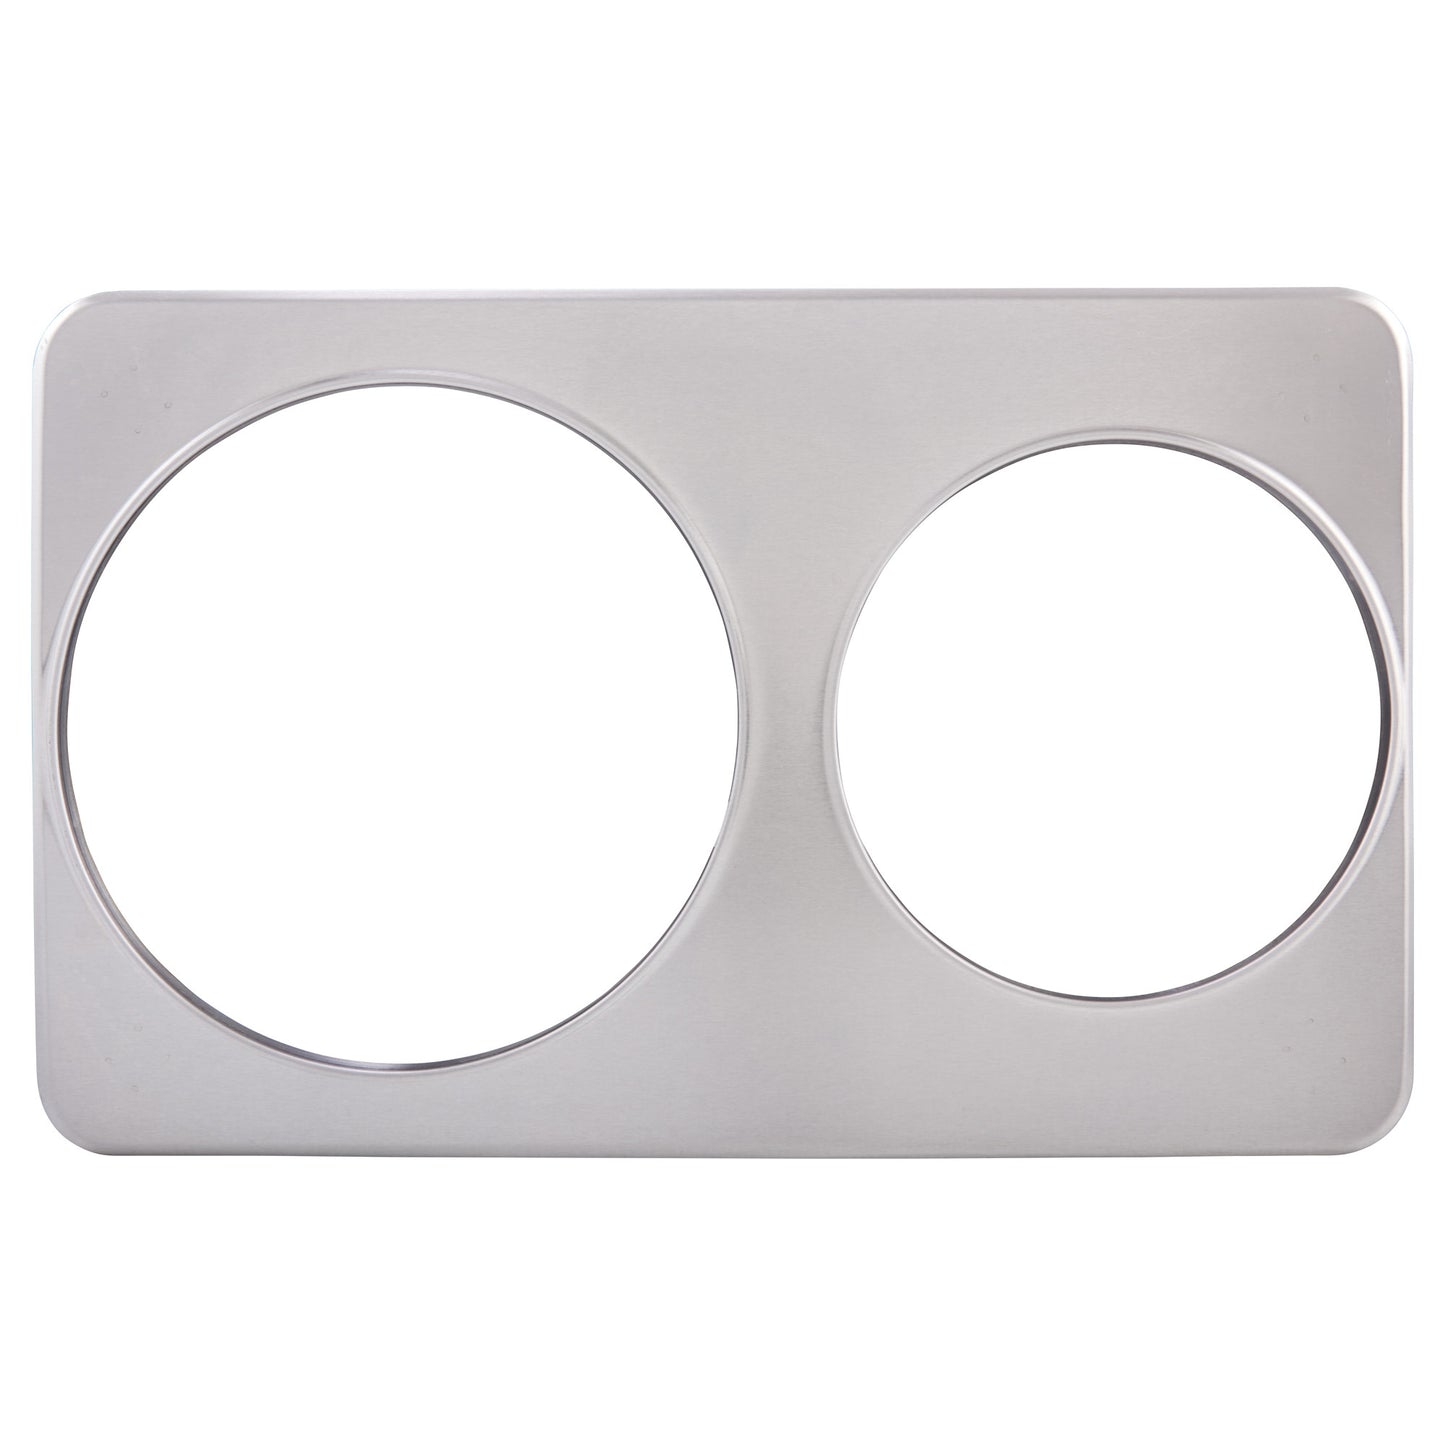 Adaptor Plate, 8-3/8" & 10-3/8" Holes, Stainless Steel